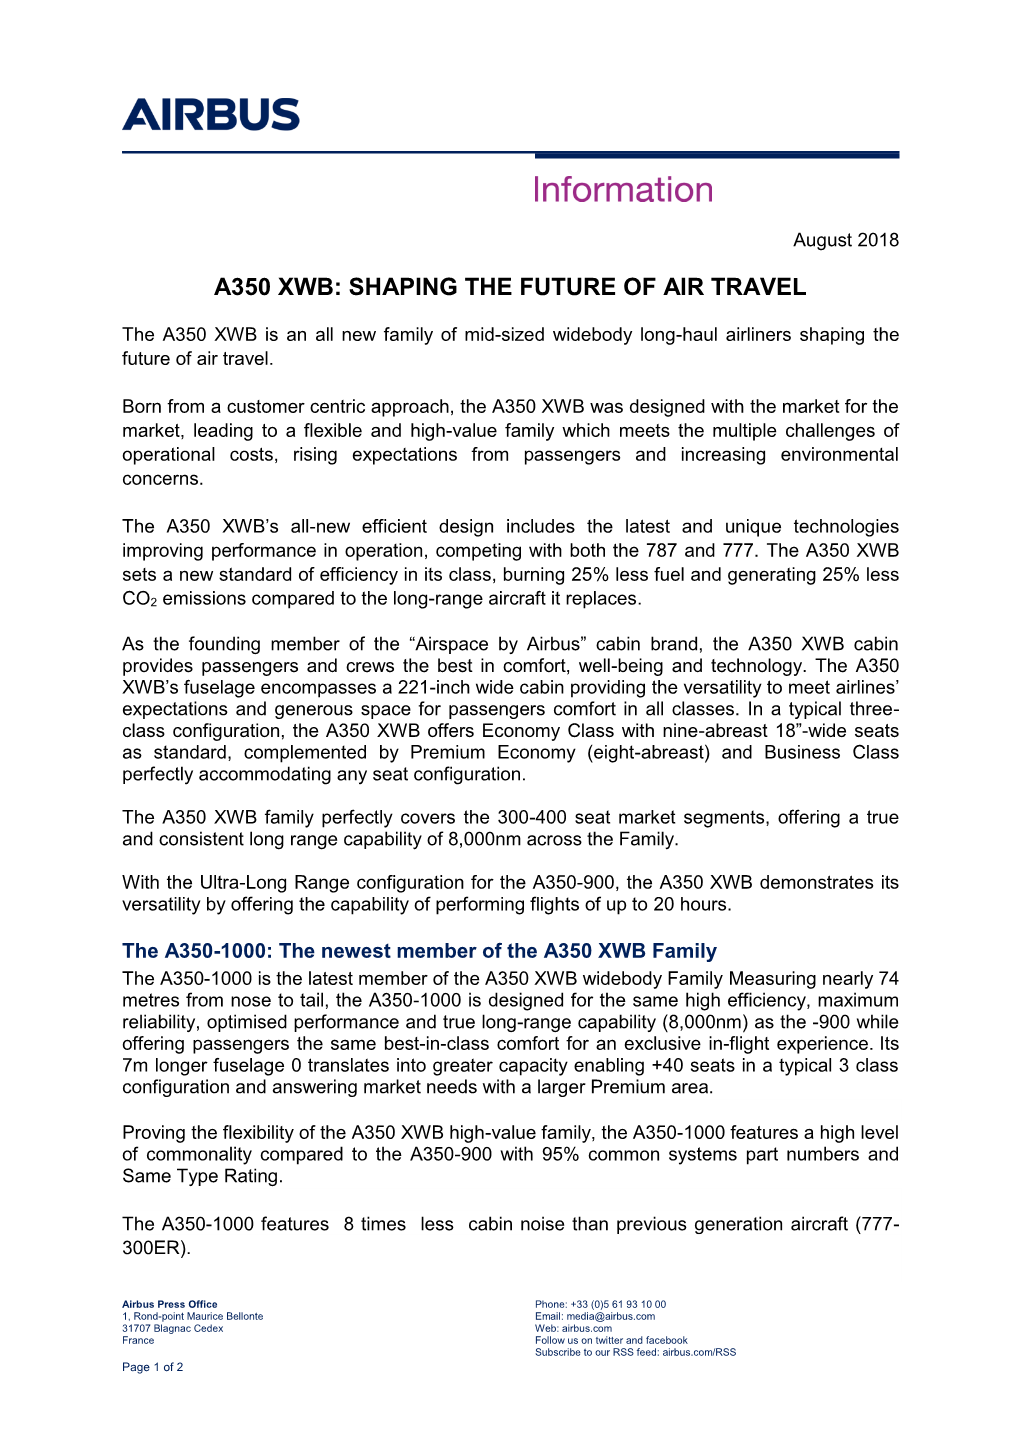 A350 Xwb: Shaping the Future of Air Travel